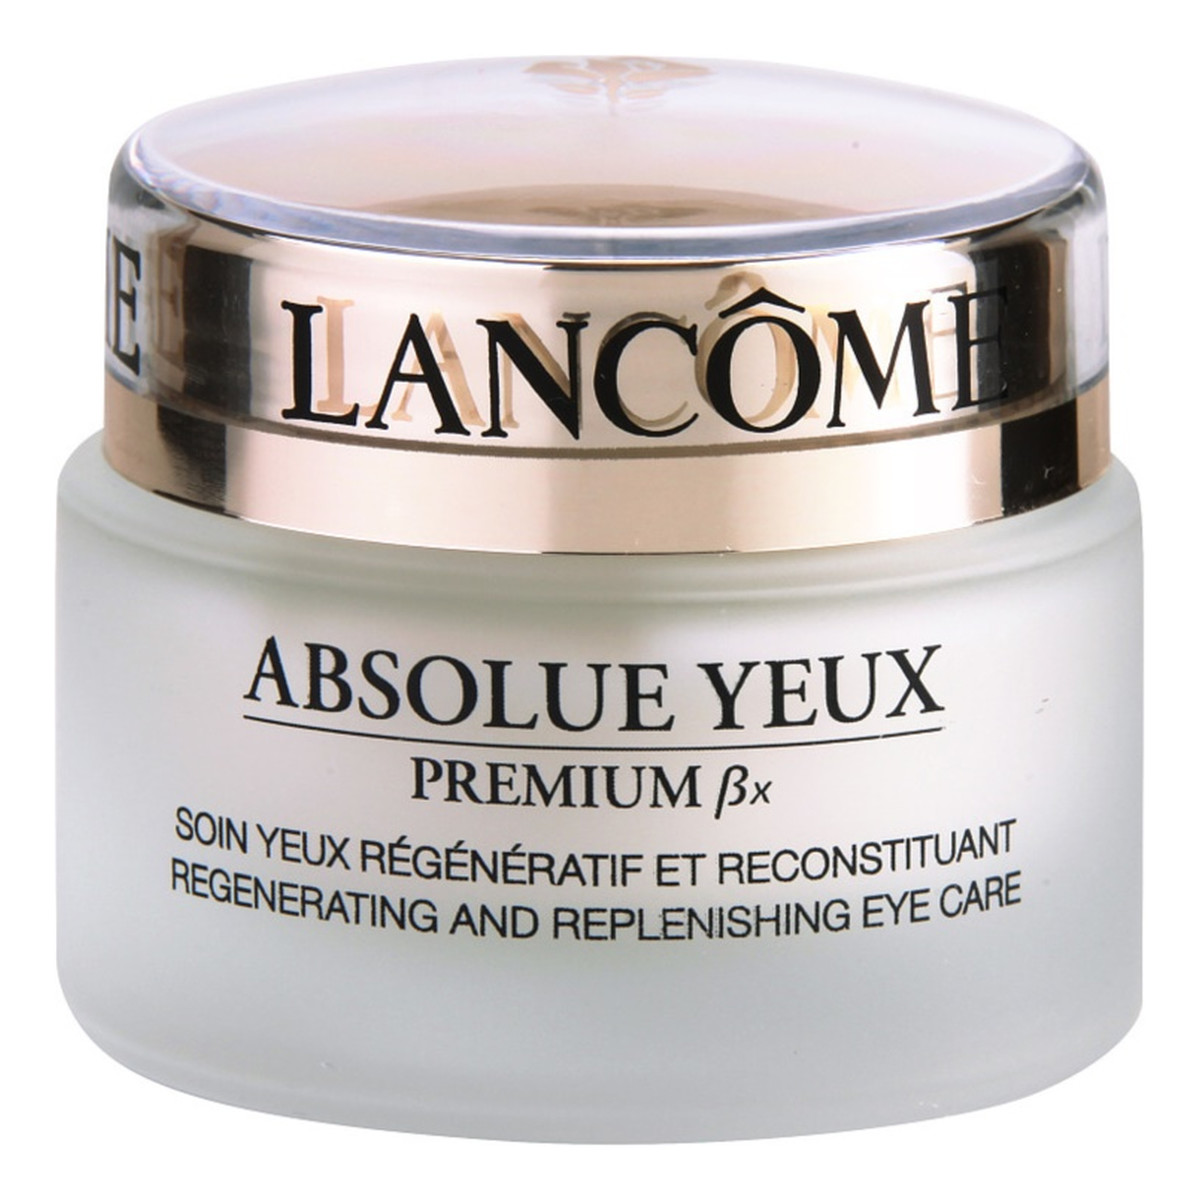 Lancome Absolue Yeux Premium ßx krem pod oczy 20ml